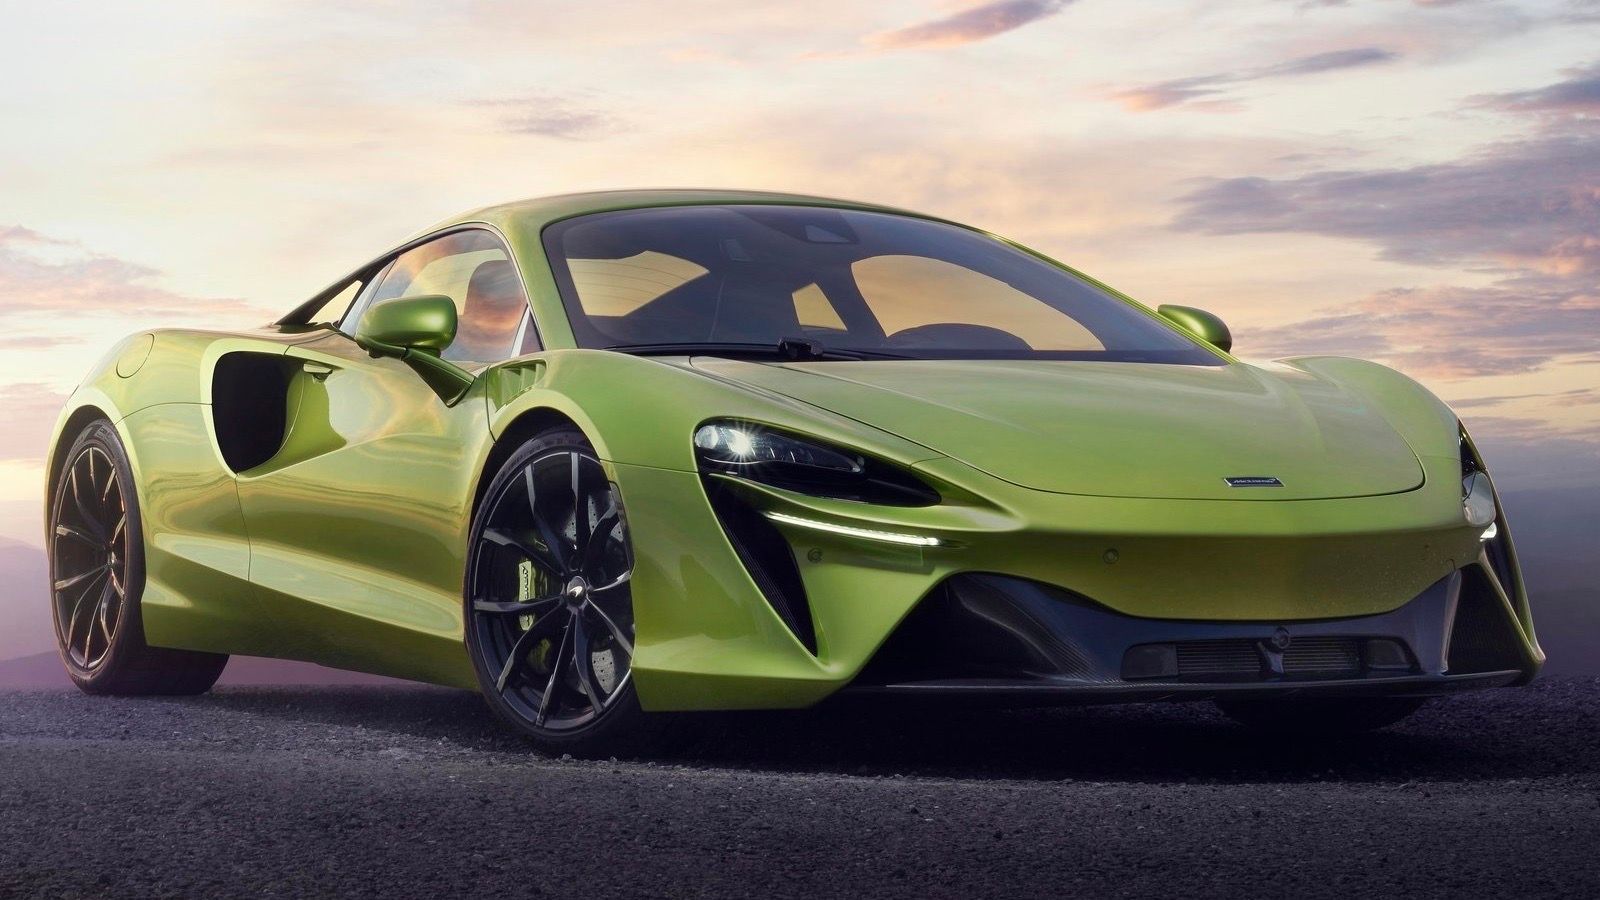 2022 McLaren Artura in green